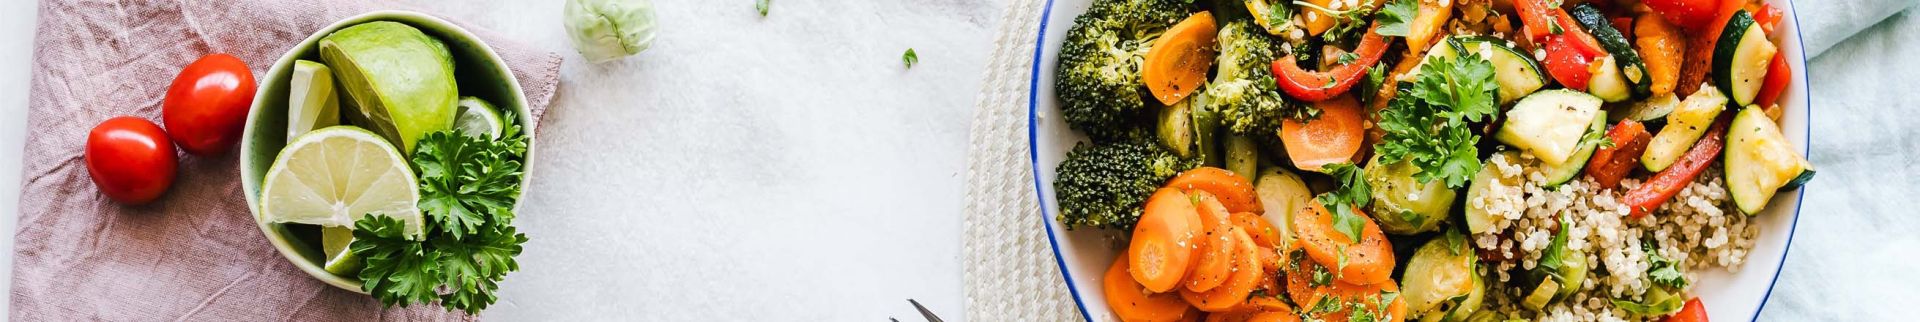 health veggies in a bowl